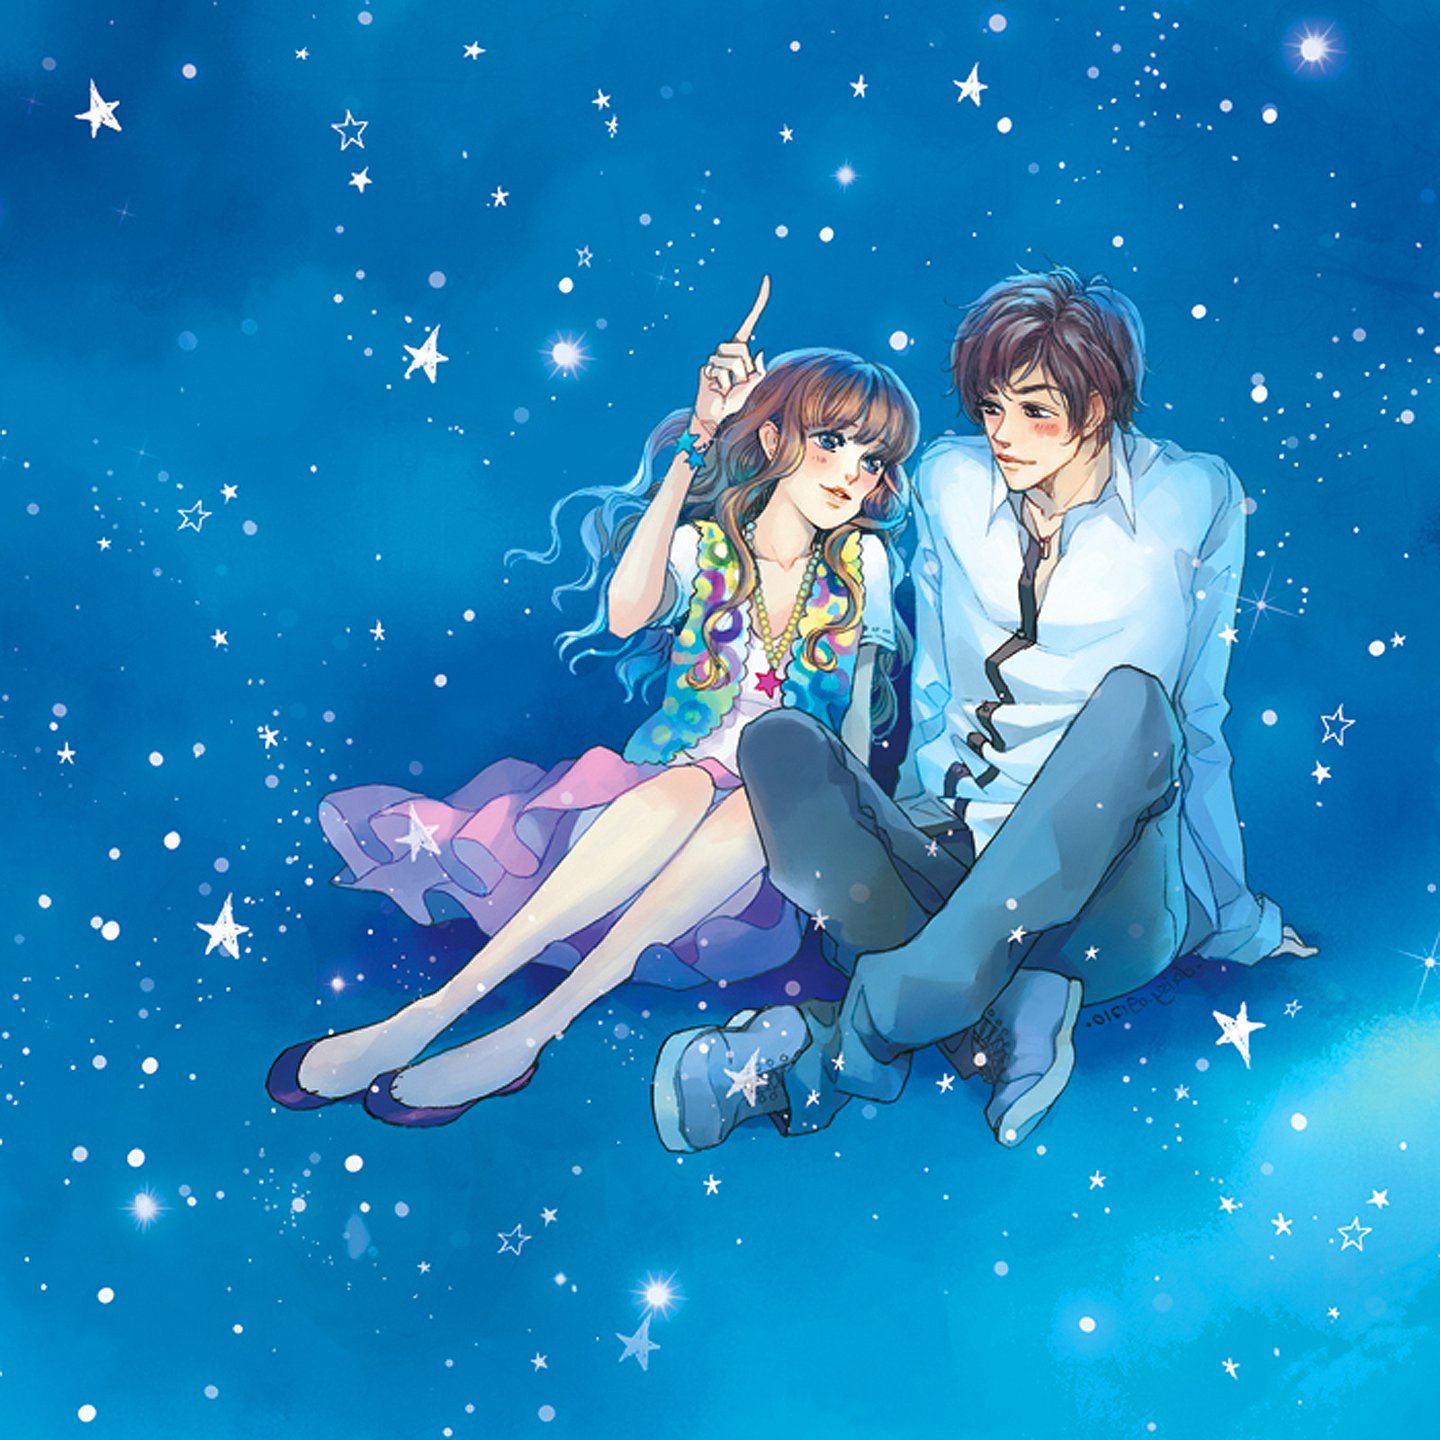 Anime Romantic Couple 2019 Wallpapers